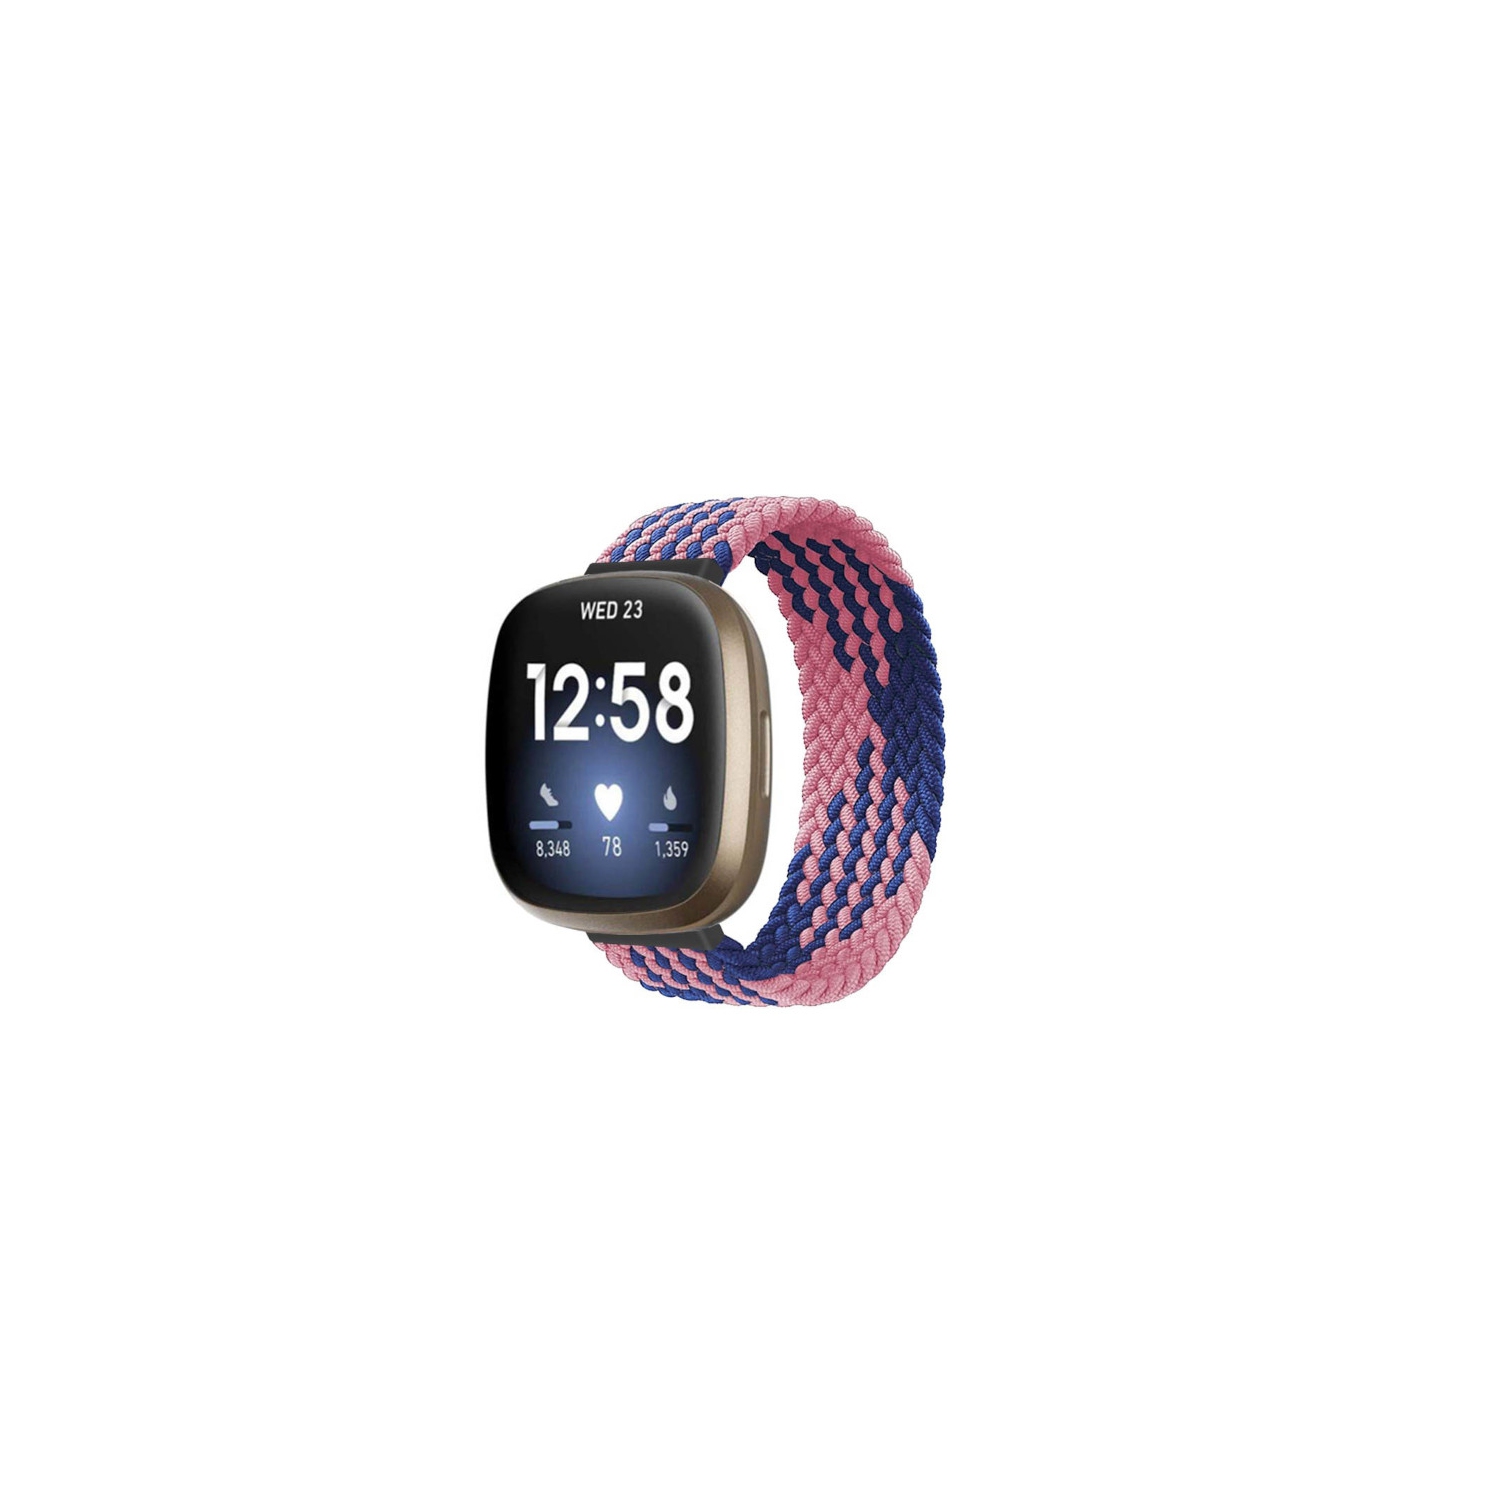 StrapsCo Patterned Elastic Nylon Watch Band Strap for Fitbit Sense - L - Fits 6.6" - 6.9" Wrist - Pink & Blue Buffalo